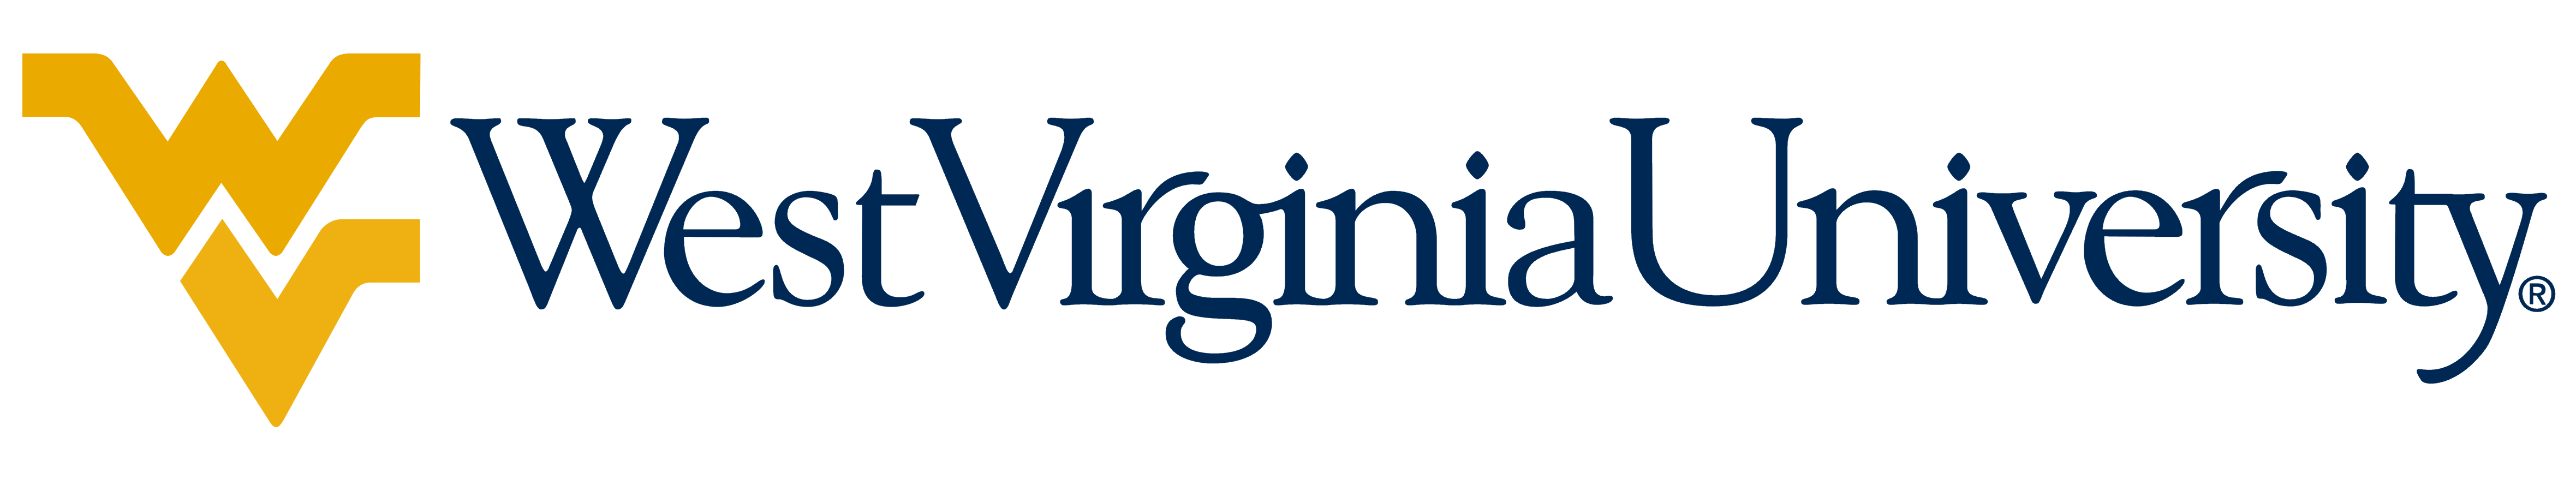 West Virginia University - WVU logo, logotype